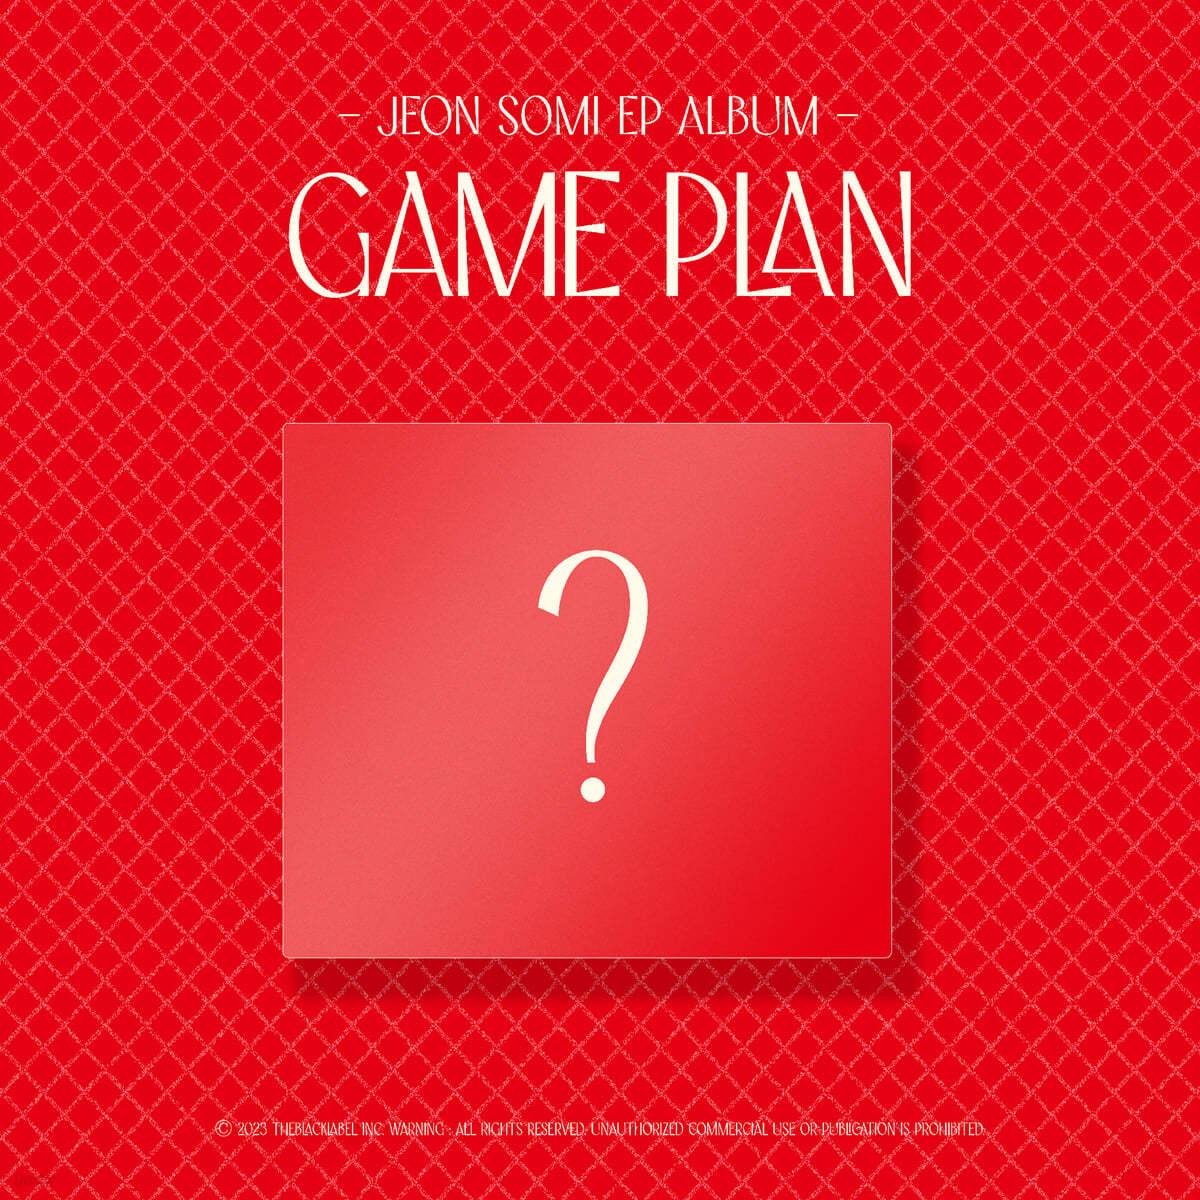 JEON SOMI EP ALBUM - GAME PLAN (JEWEL ALBUM Ver.) - KKANG